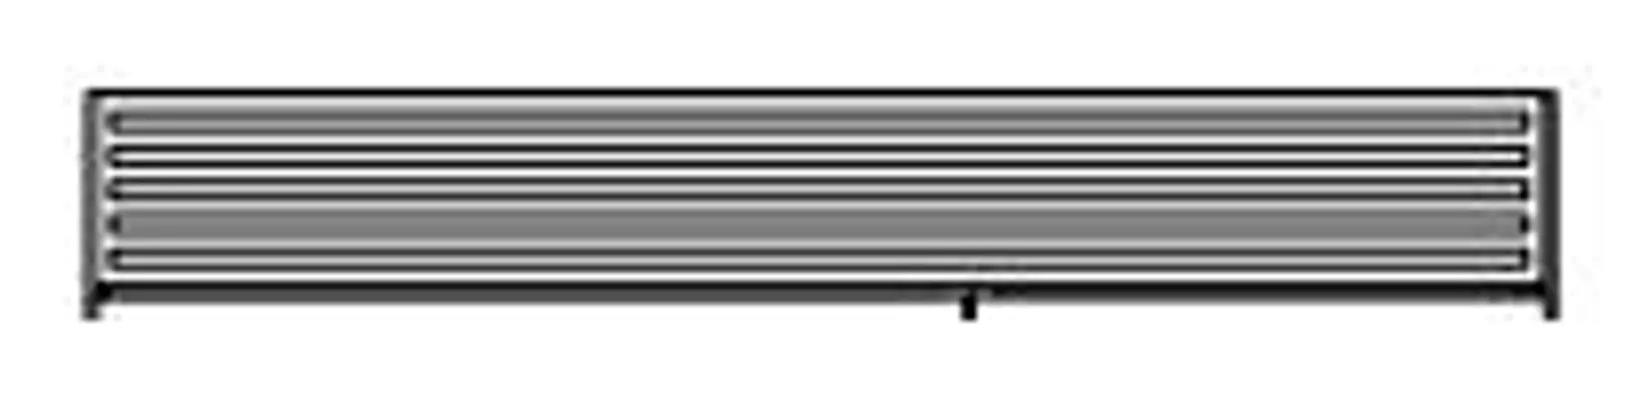 XPRO90TOP-Fhiaba-Koel-vries-accessoires